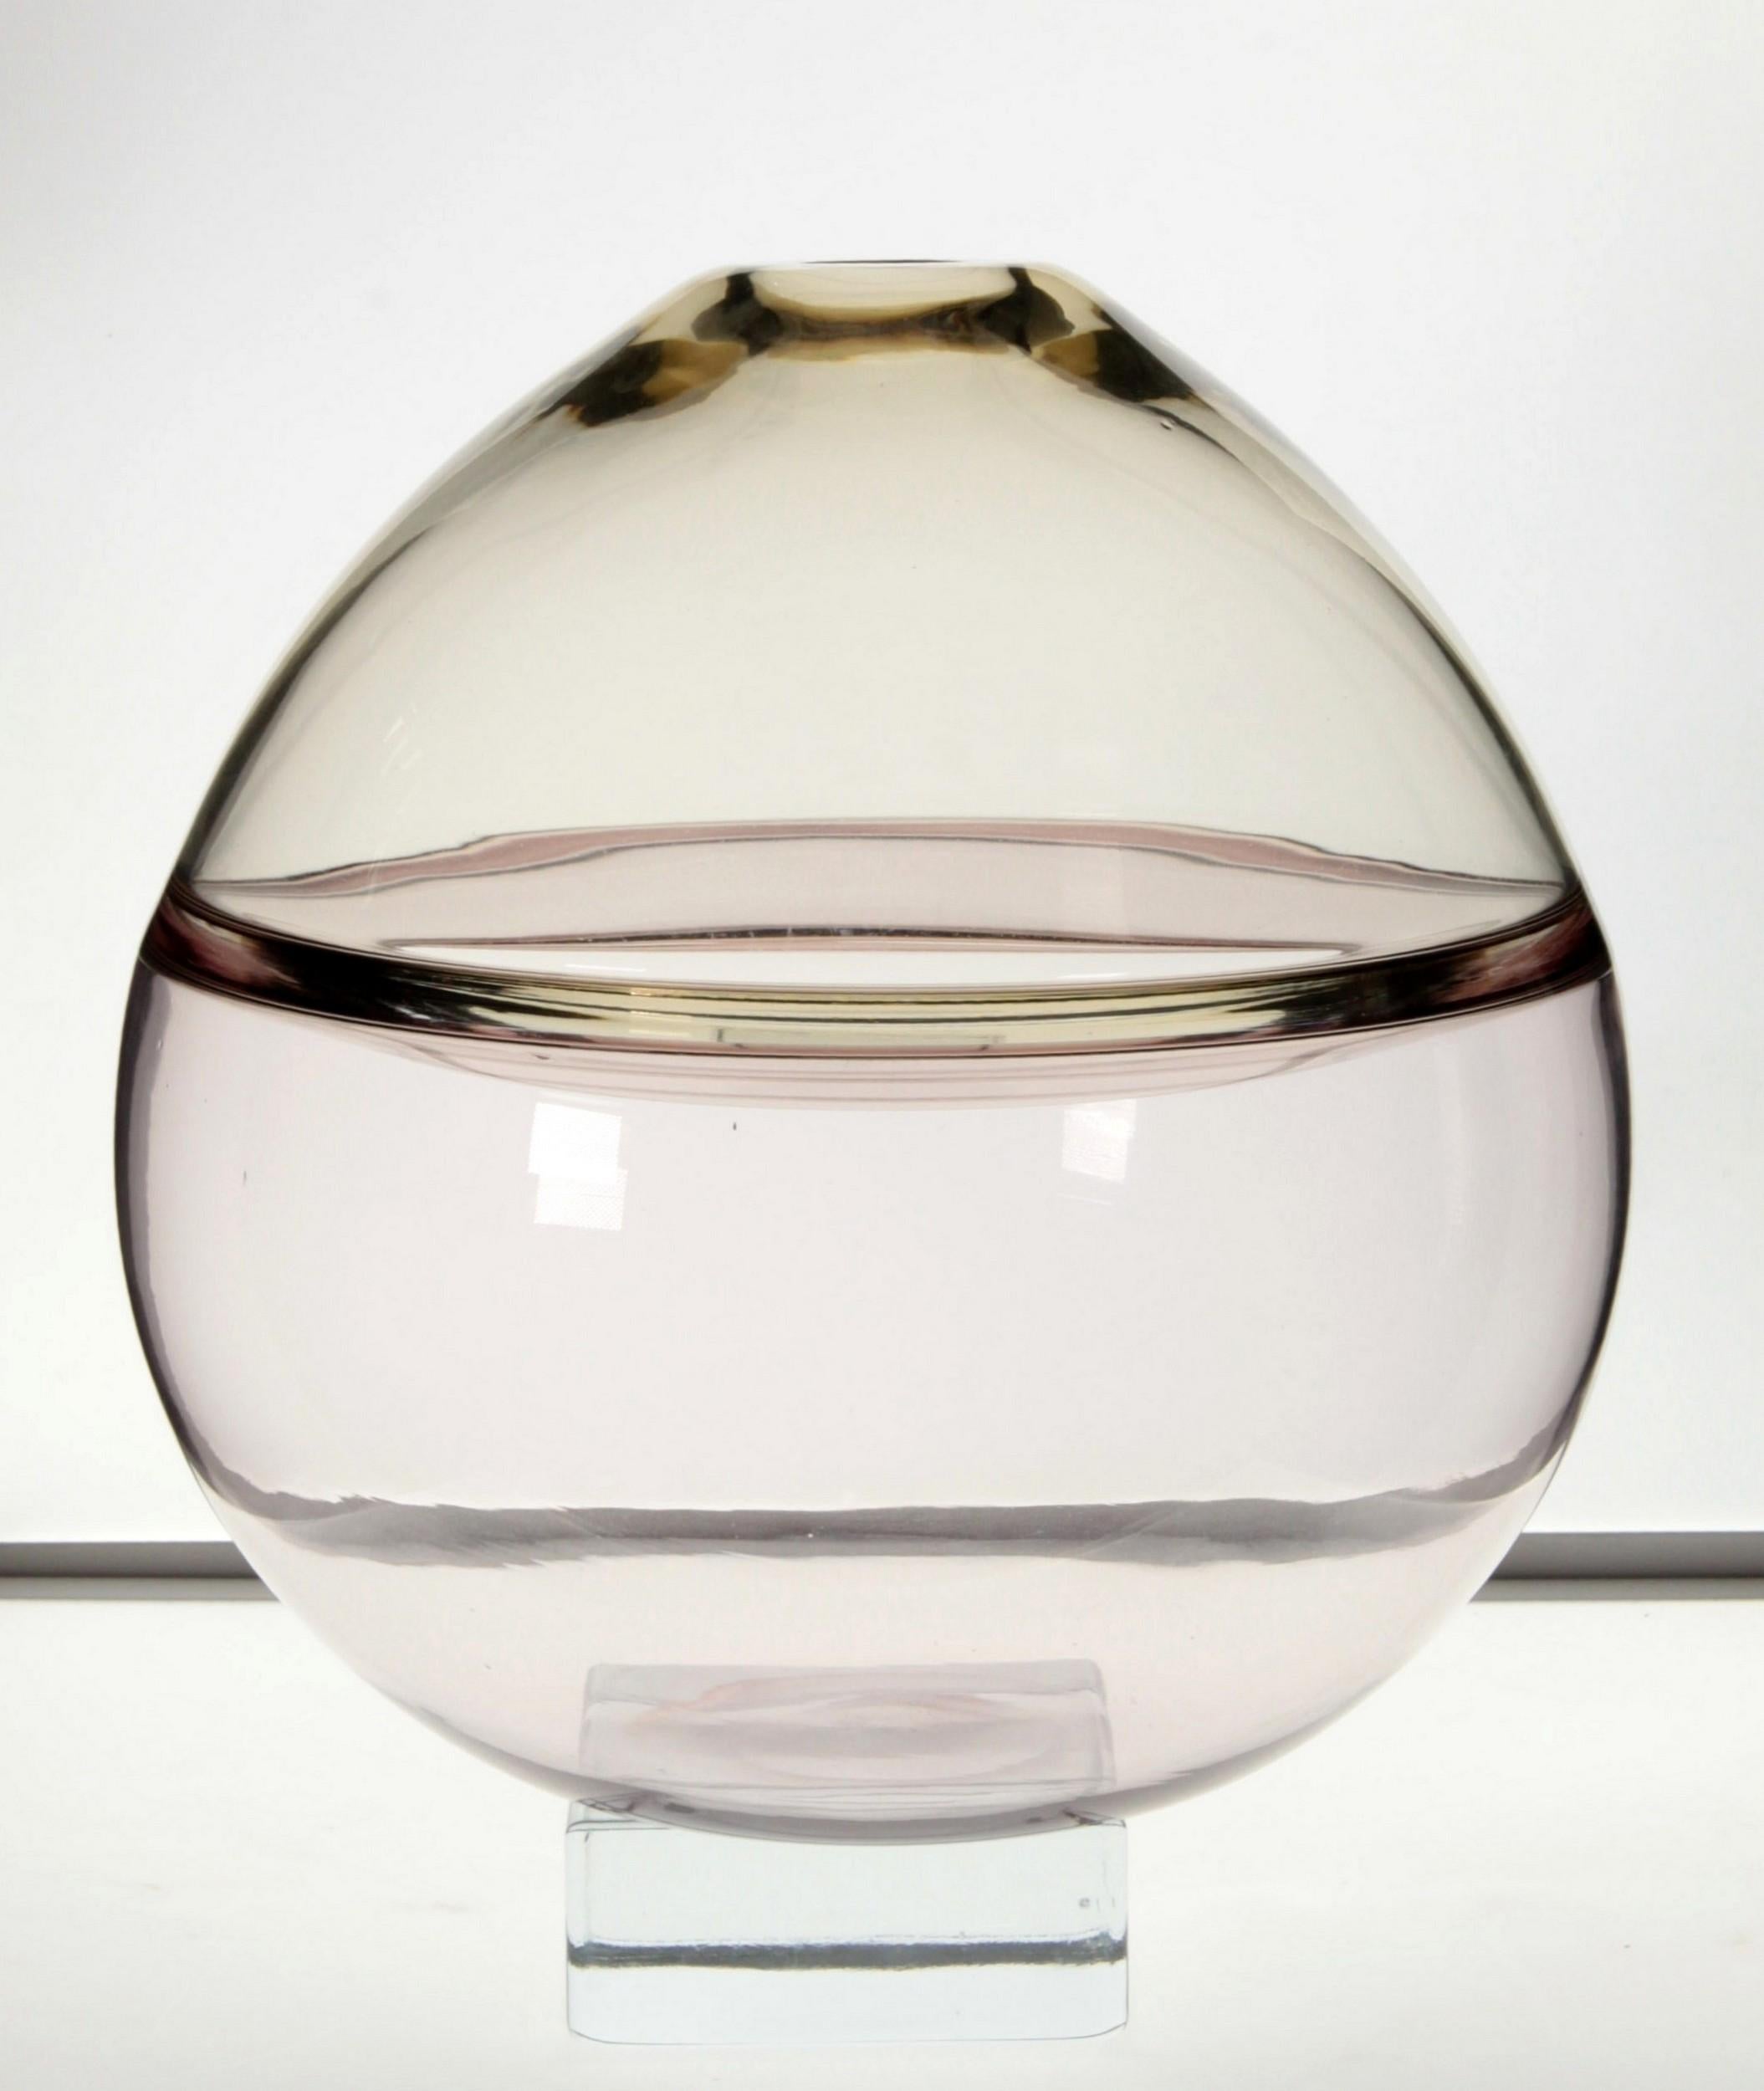 Paolo Crepax Asimmetrico Vase Fume Grey Incalmo Inner Flap, Murano Glass Signed 2